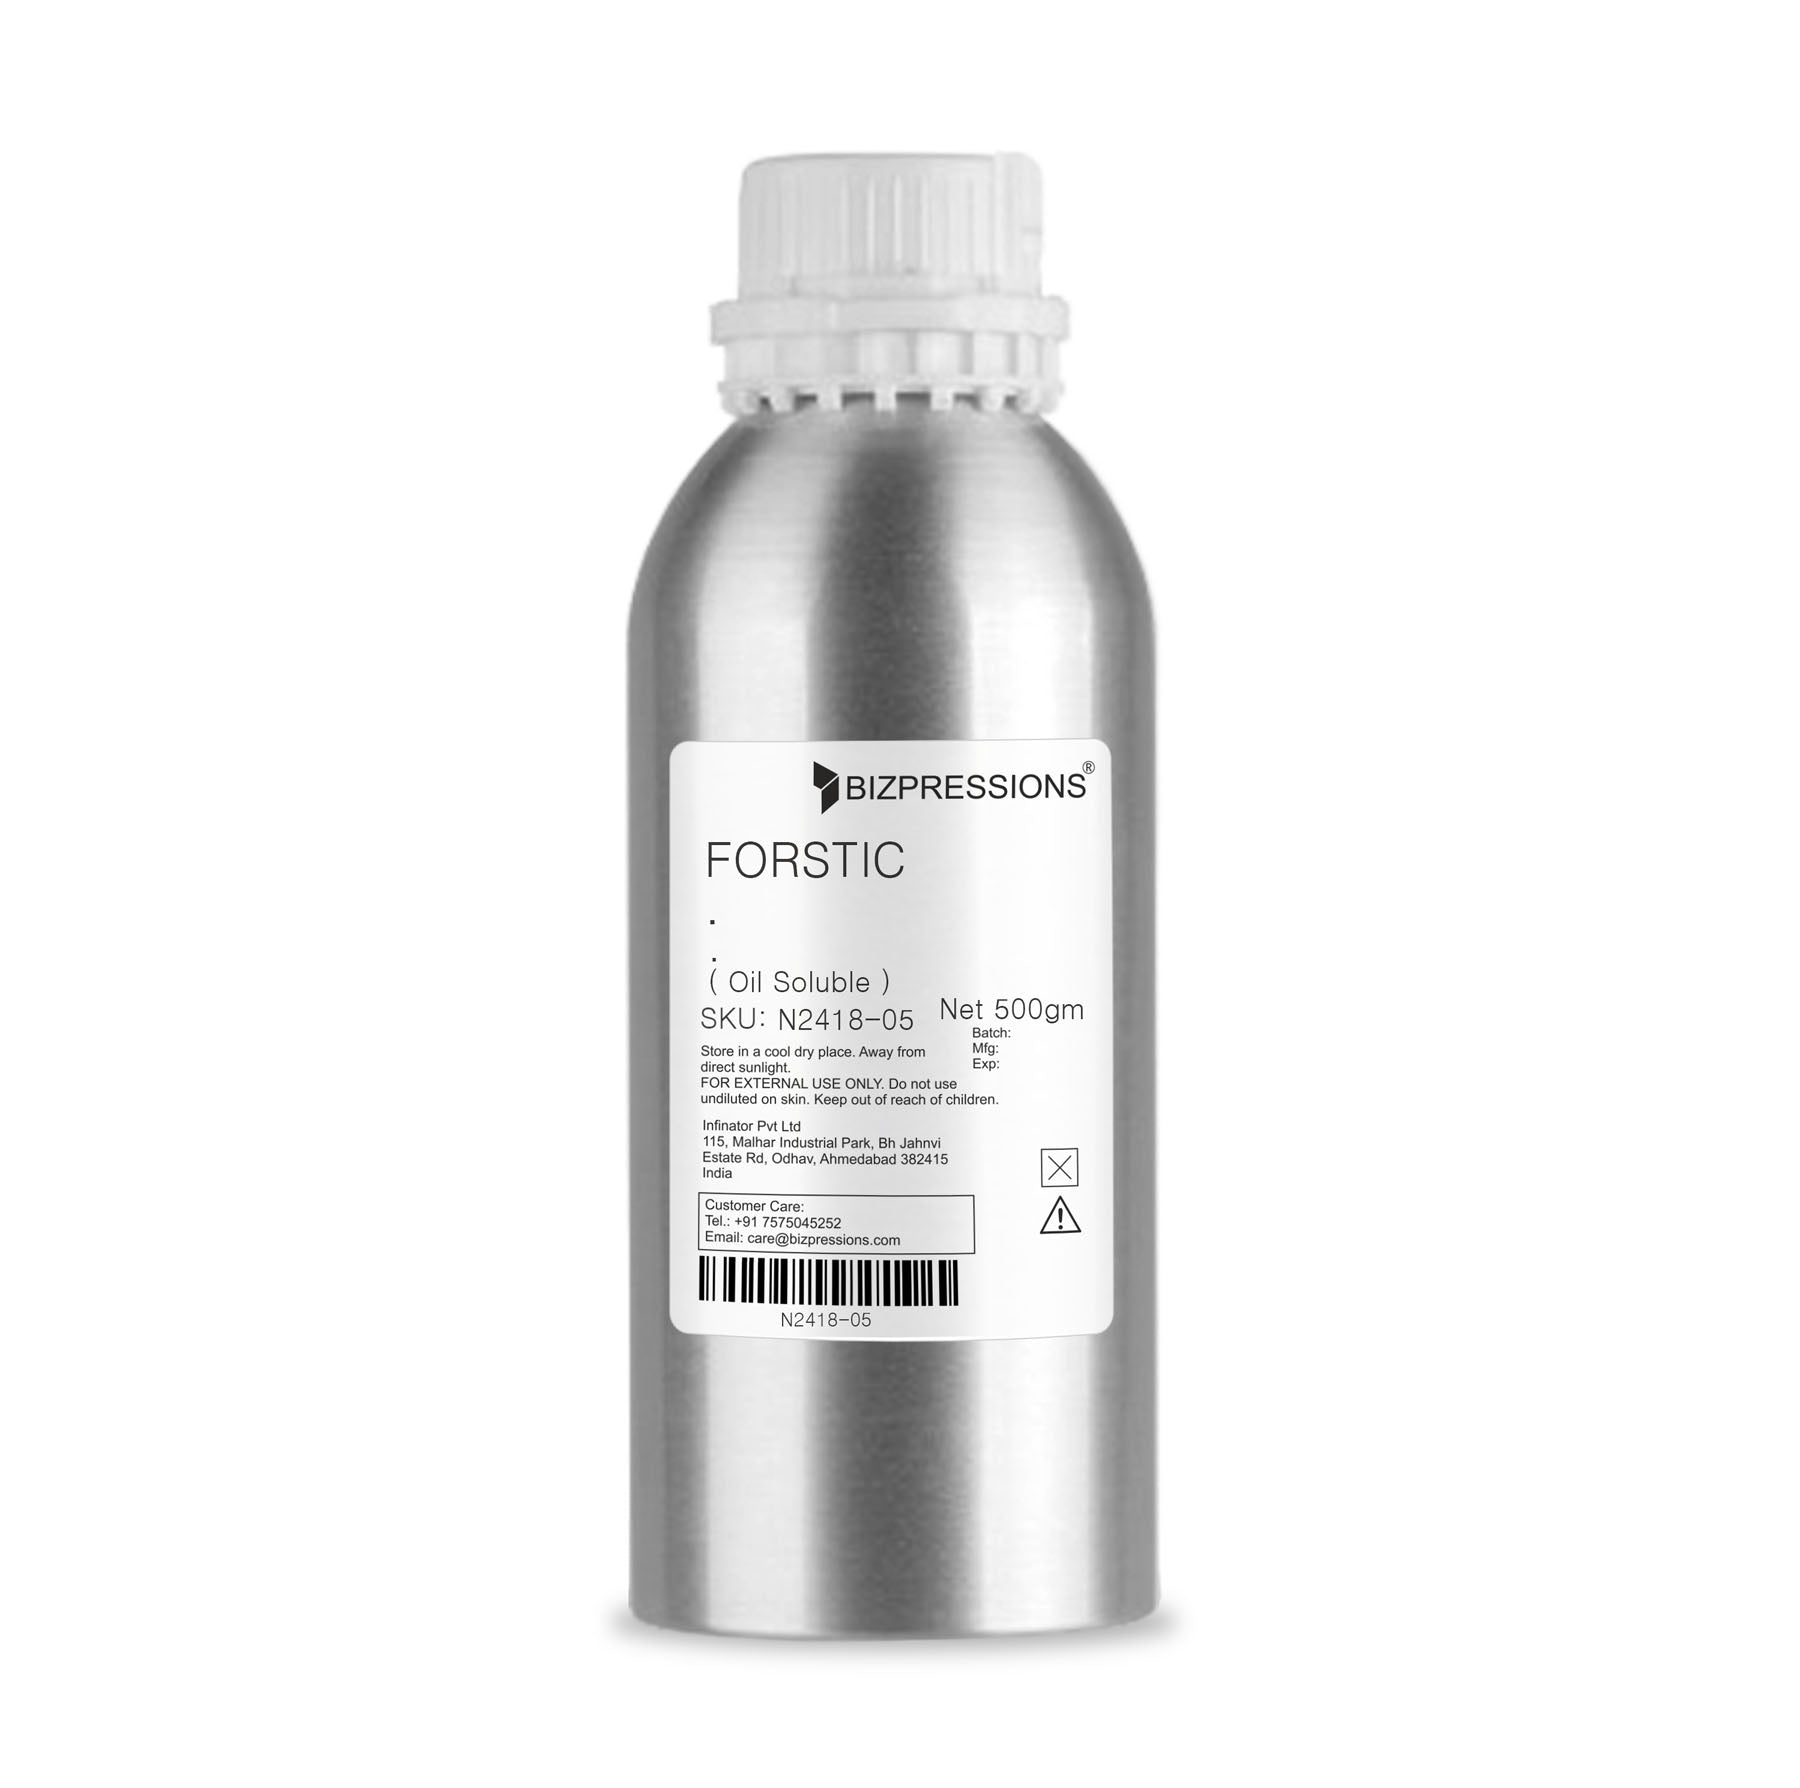 FORSTIC - Fragrance ( Oil Soluble ) - 500 gm